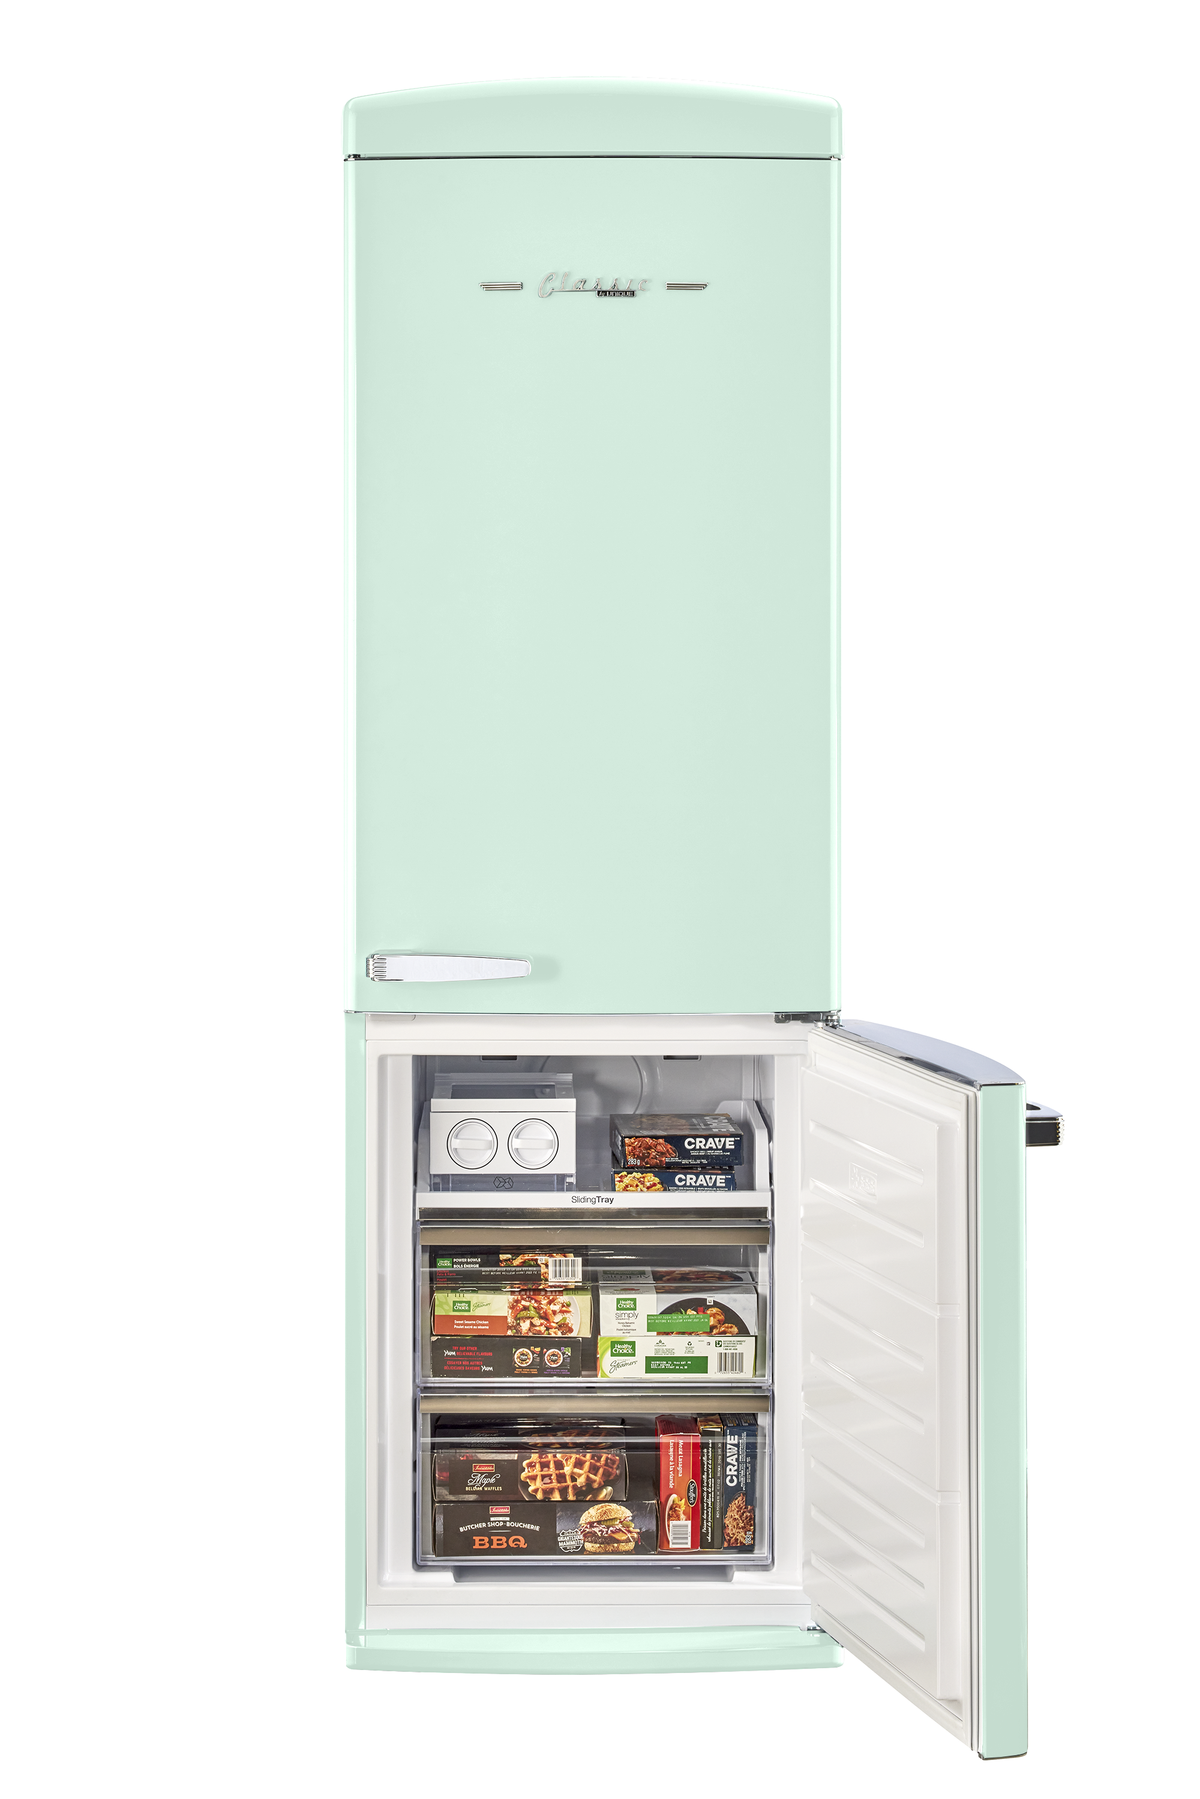 Unique 340Litre Mint Green Bottom Mount Refrigerator